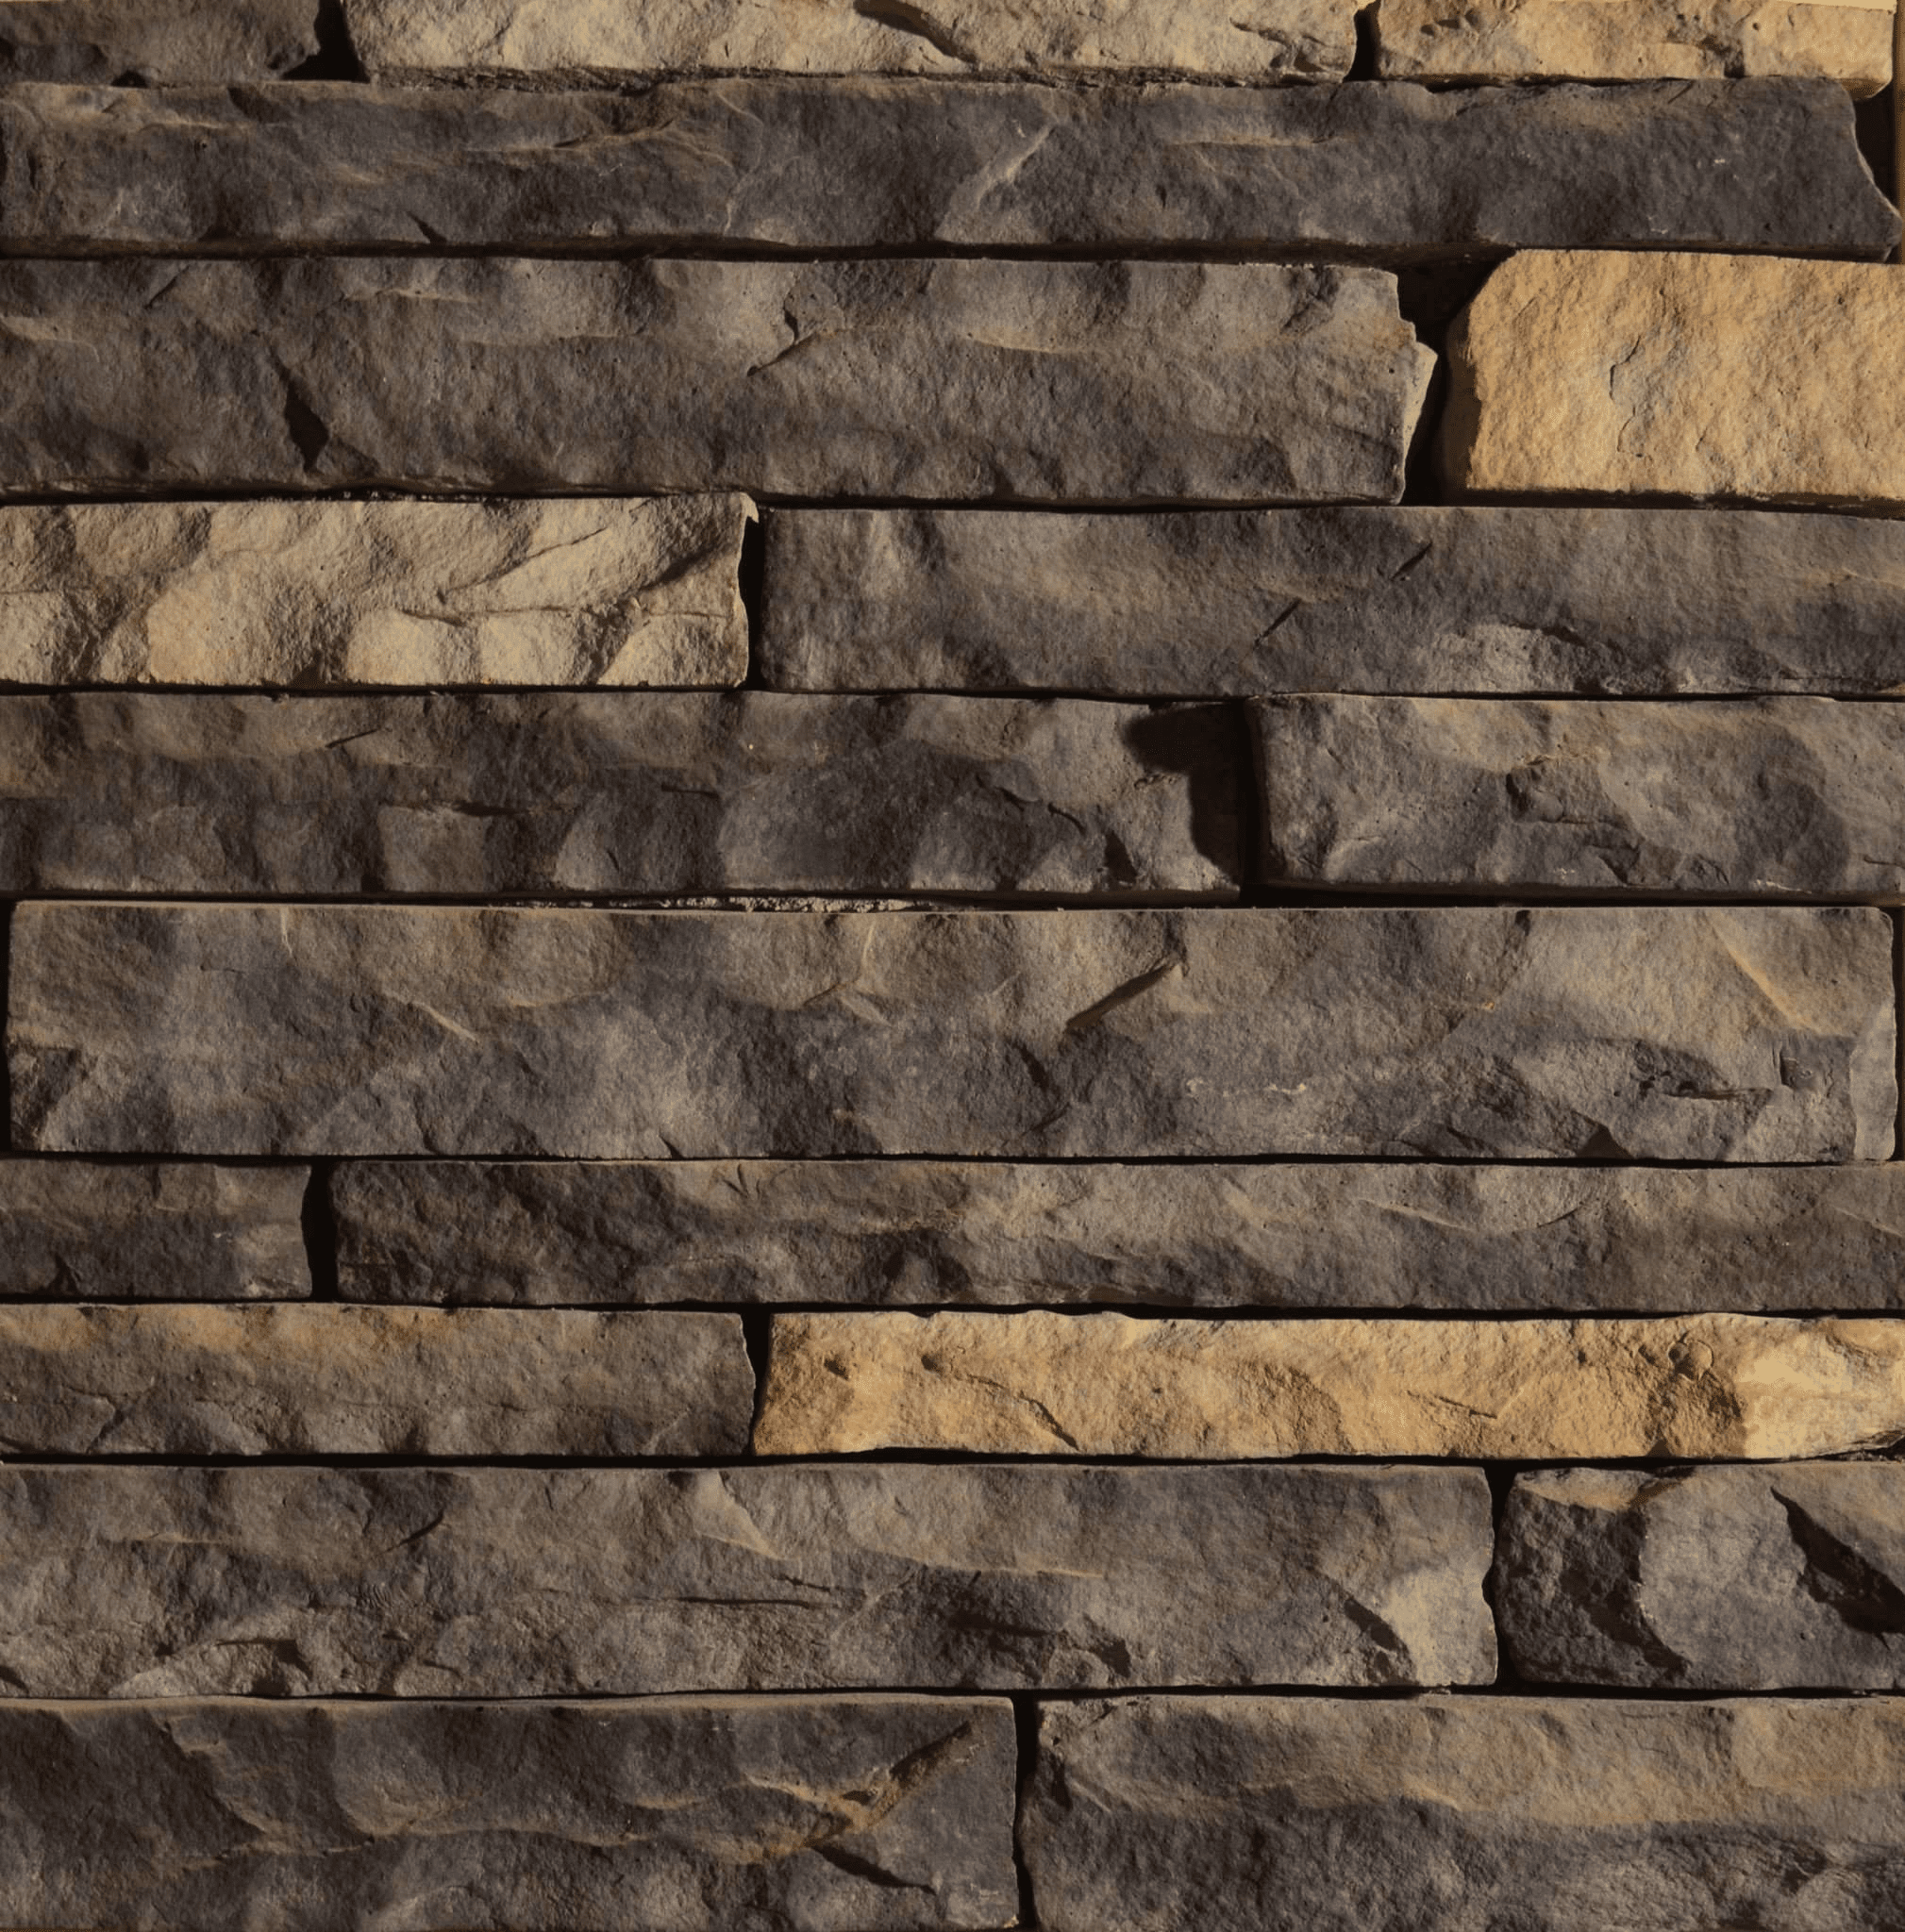 Boulder Creek - European Stackstone cheap stone veneer clearance - Discount Stones wholesale stone veneer, cheap brick veneer, cultured stone for sale